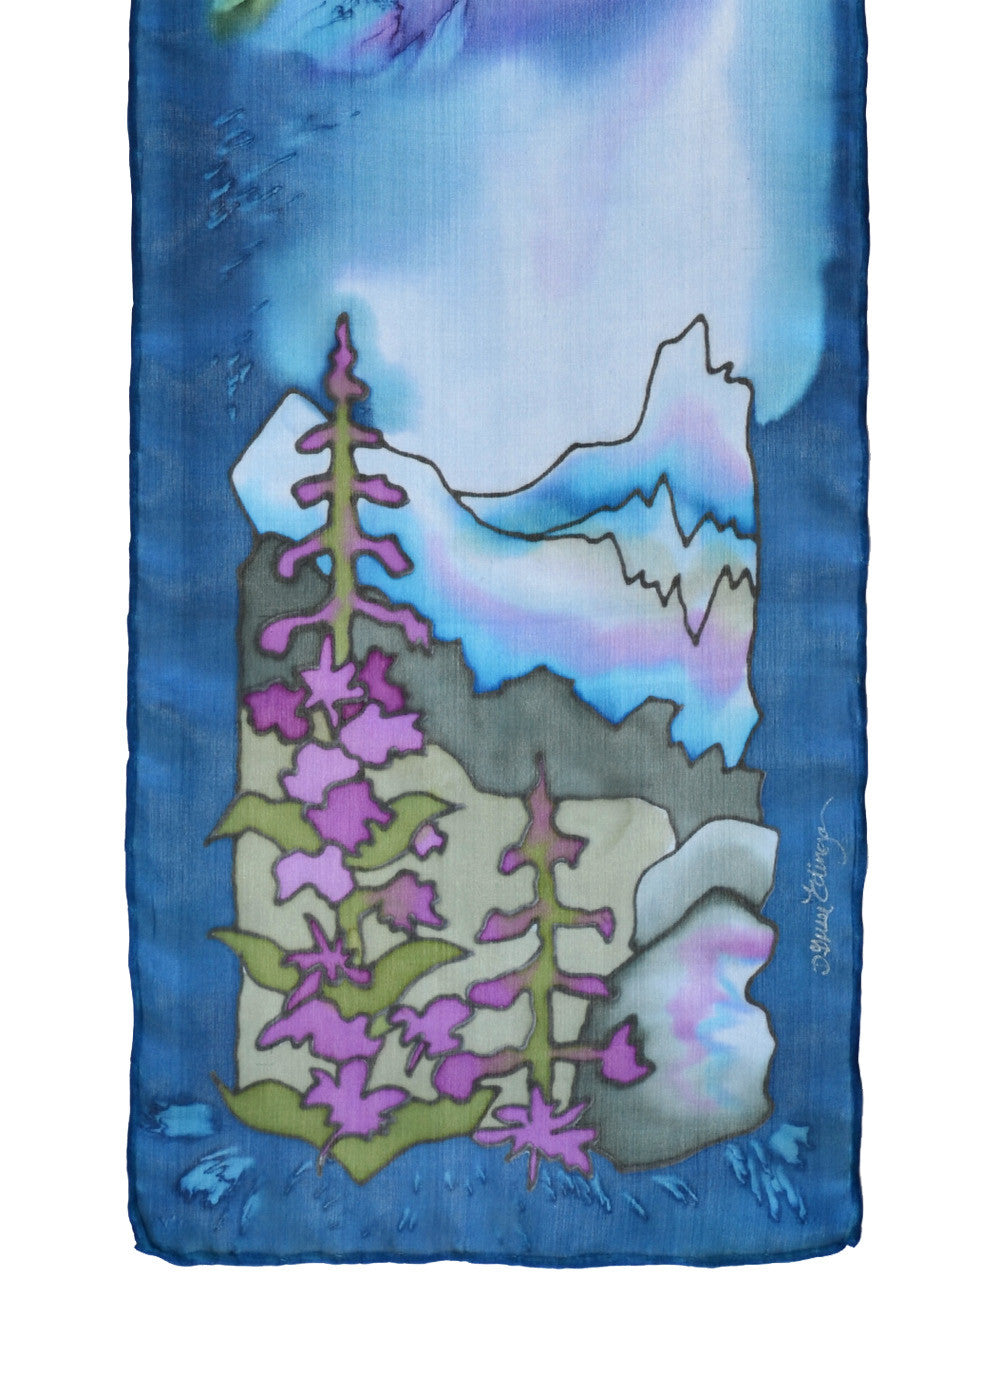 Silk scarf with fireweed design in denim blue